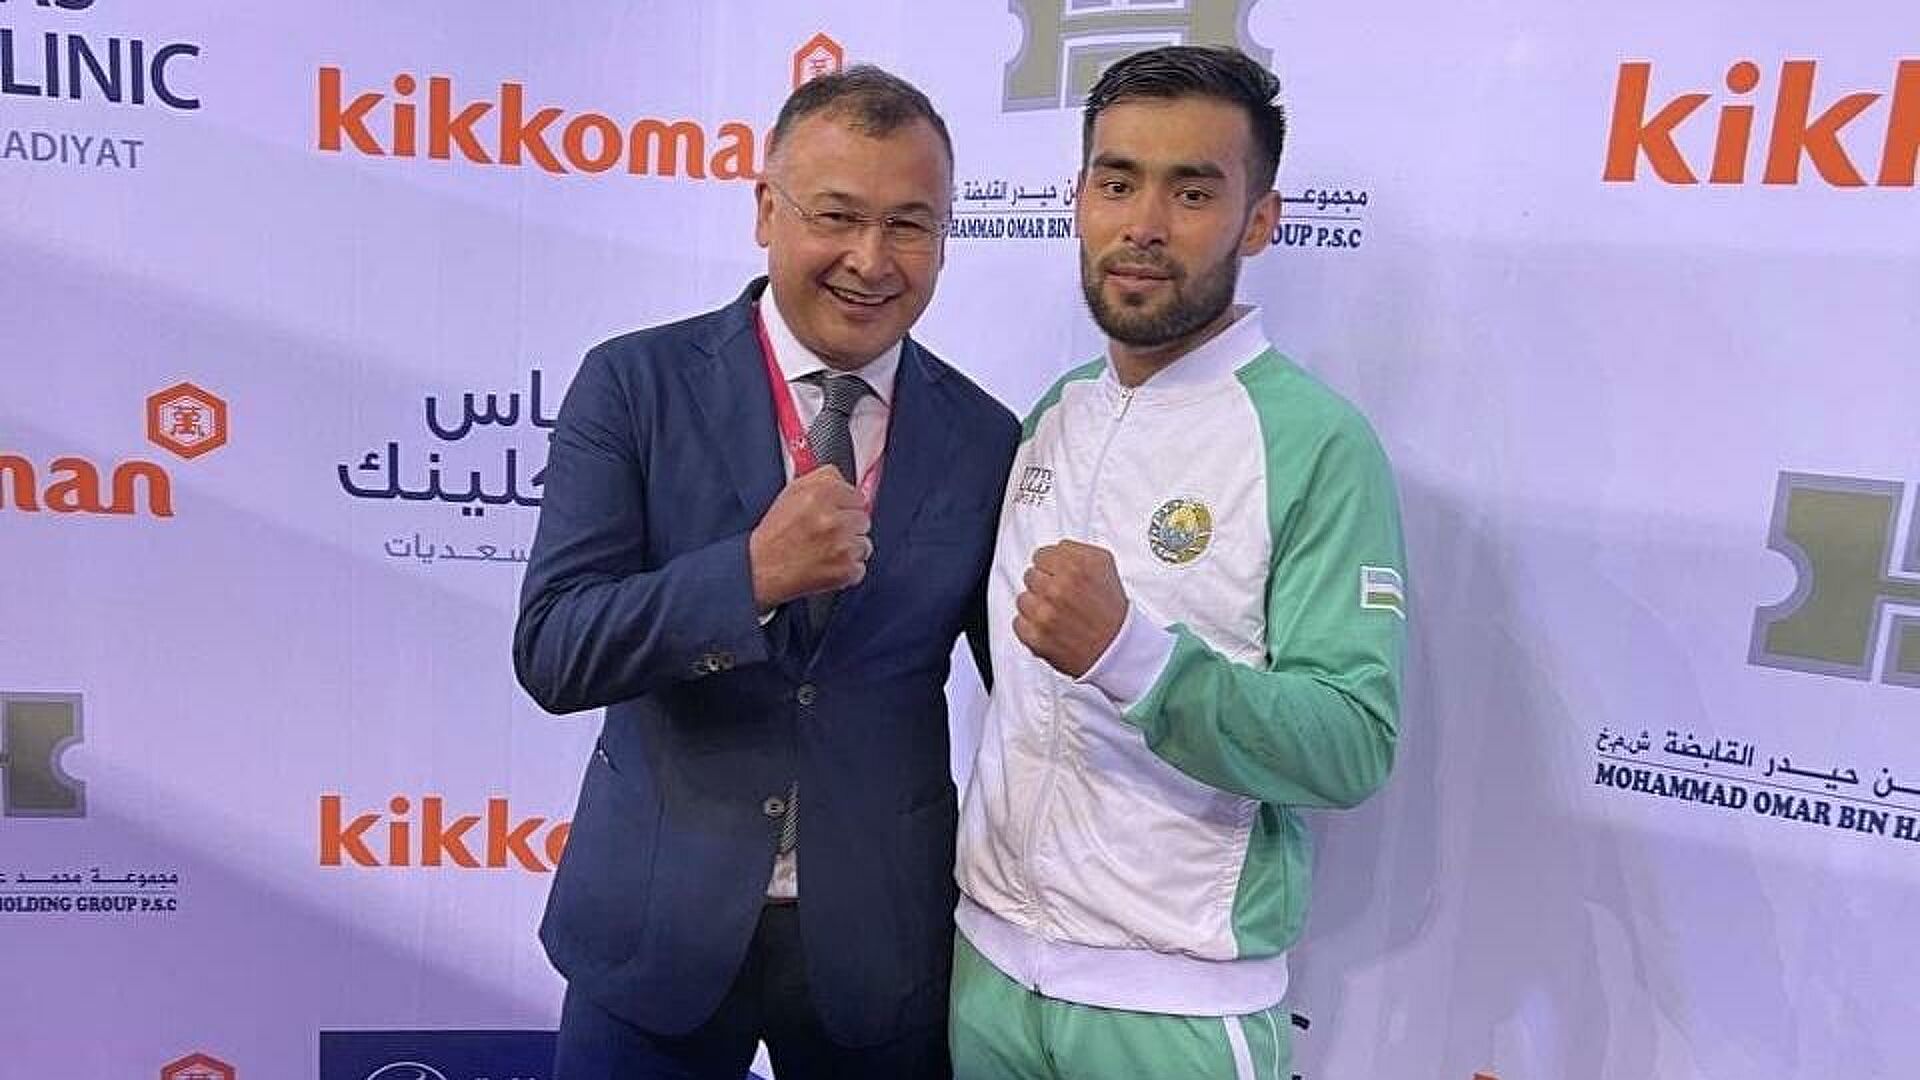 Каратист из Узбекистана впервые стал чемпионом мира